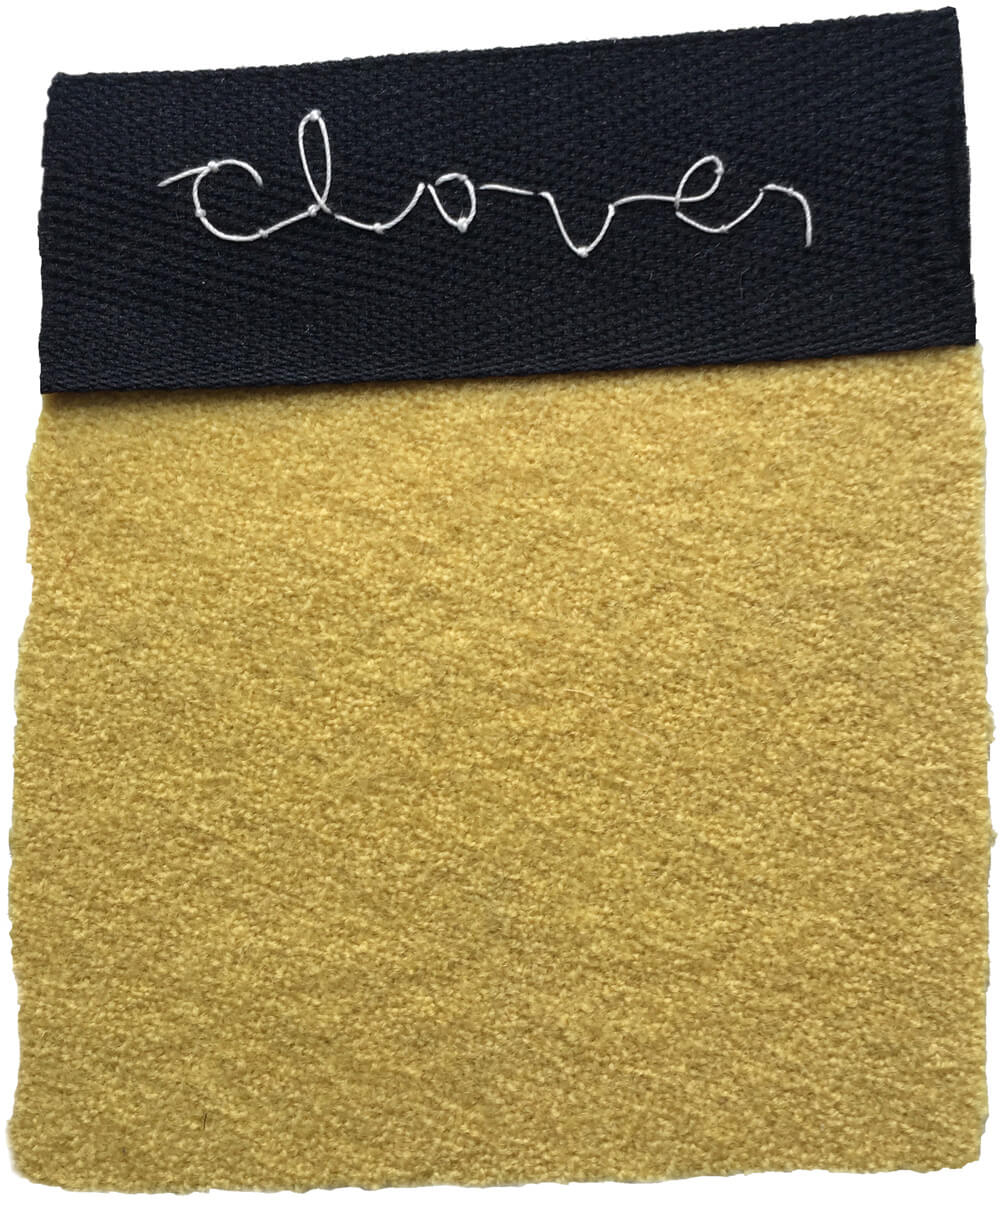 textile sample - Clover 